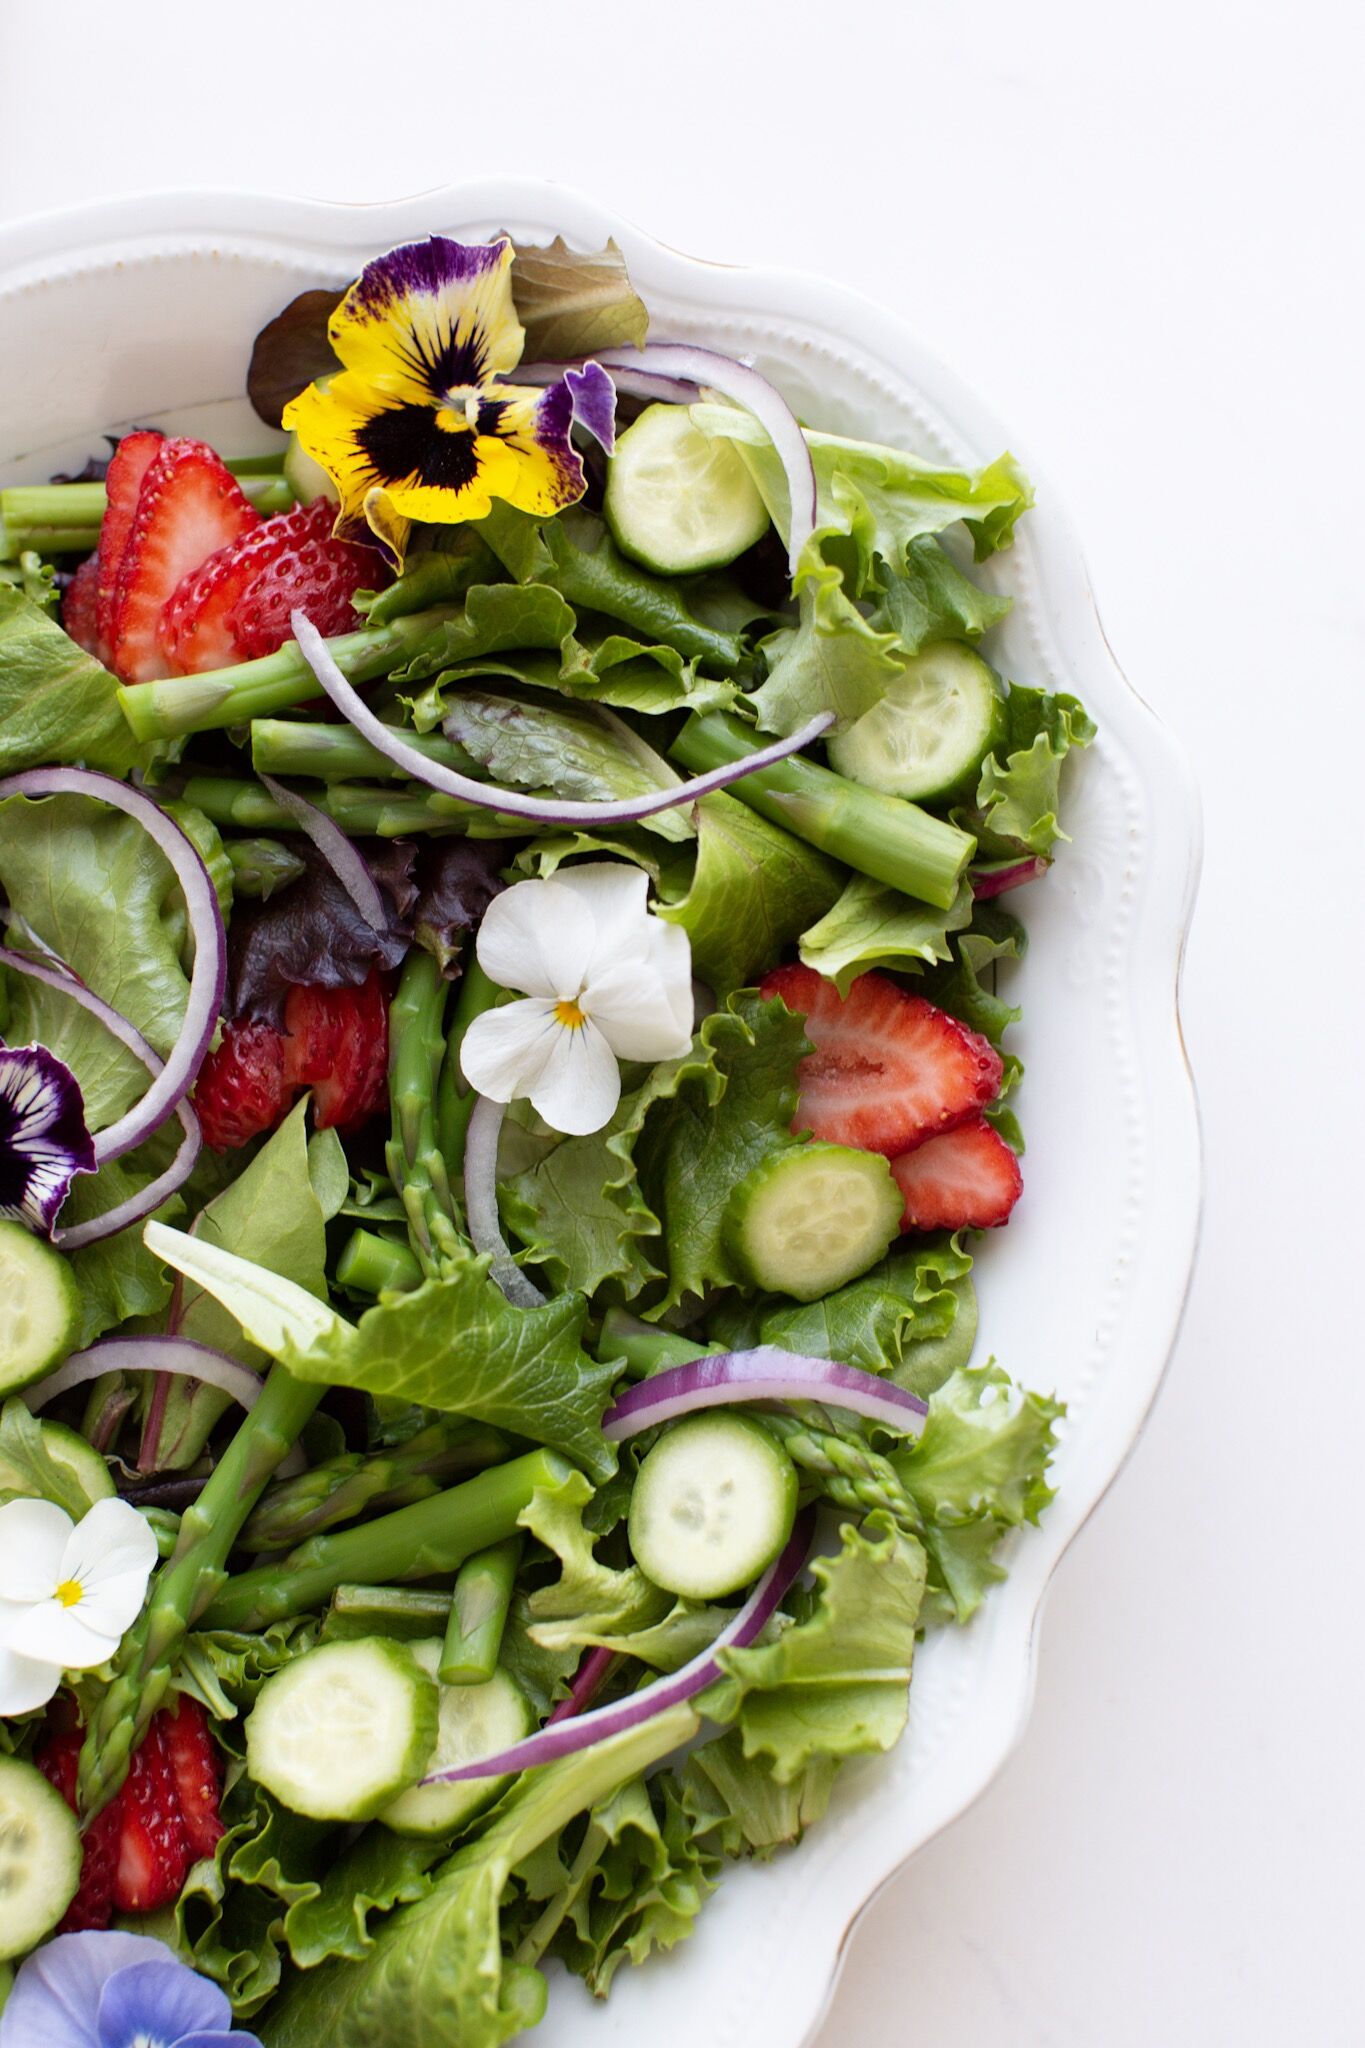 Spring Salad with edible flowers and creamy lemon vinaigrette.